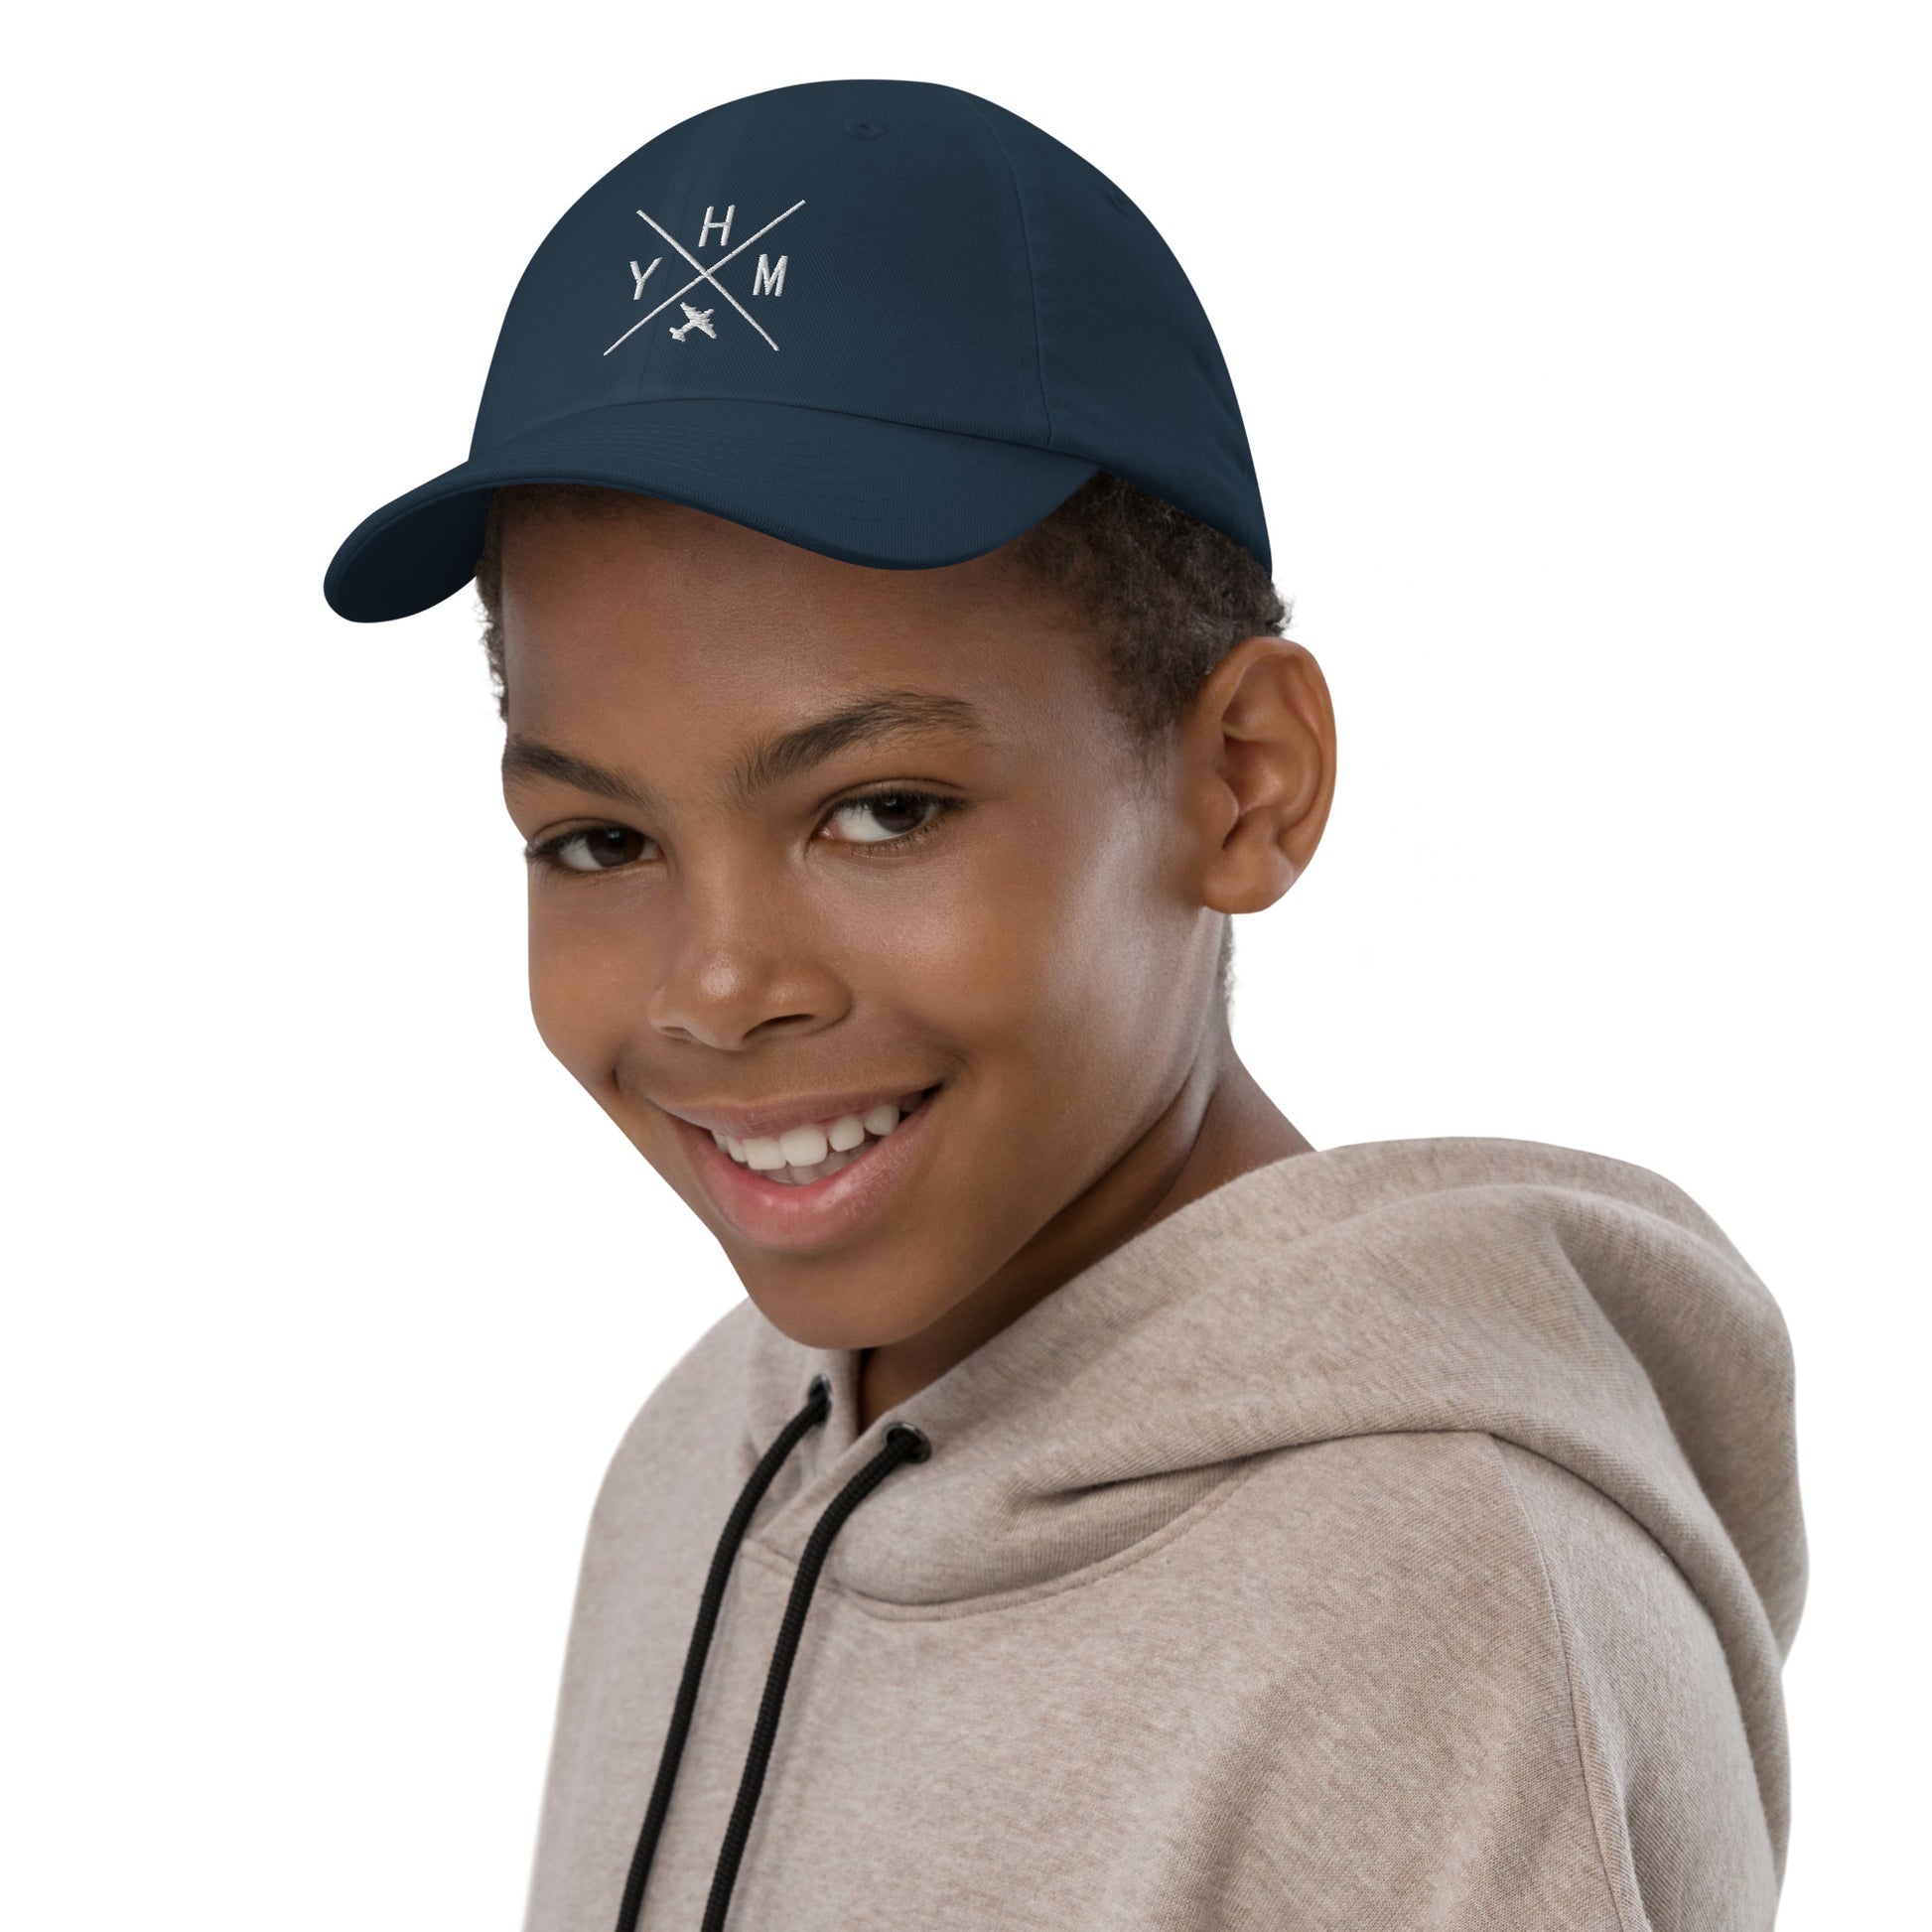 Crossed-X Kid's Baseball Cap - White • YHM Hamilton • YHM Designs - Image 03